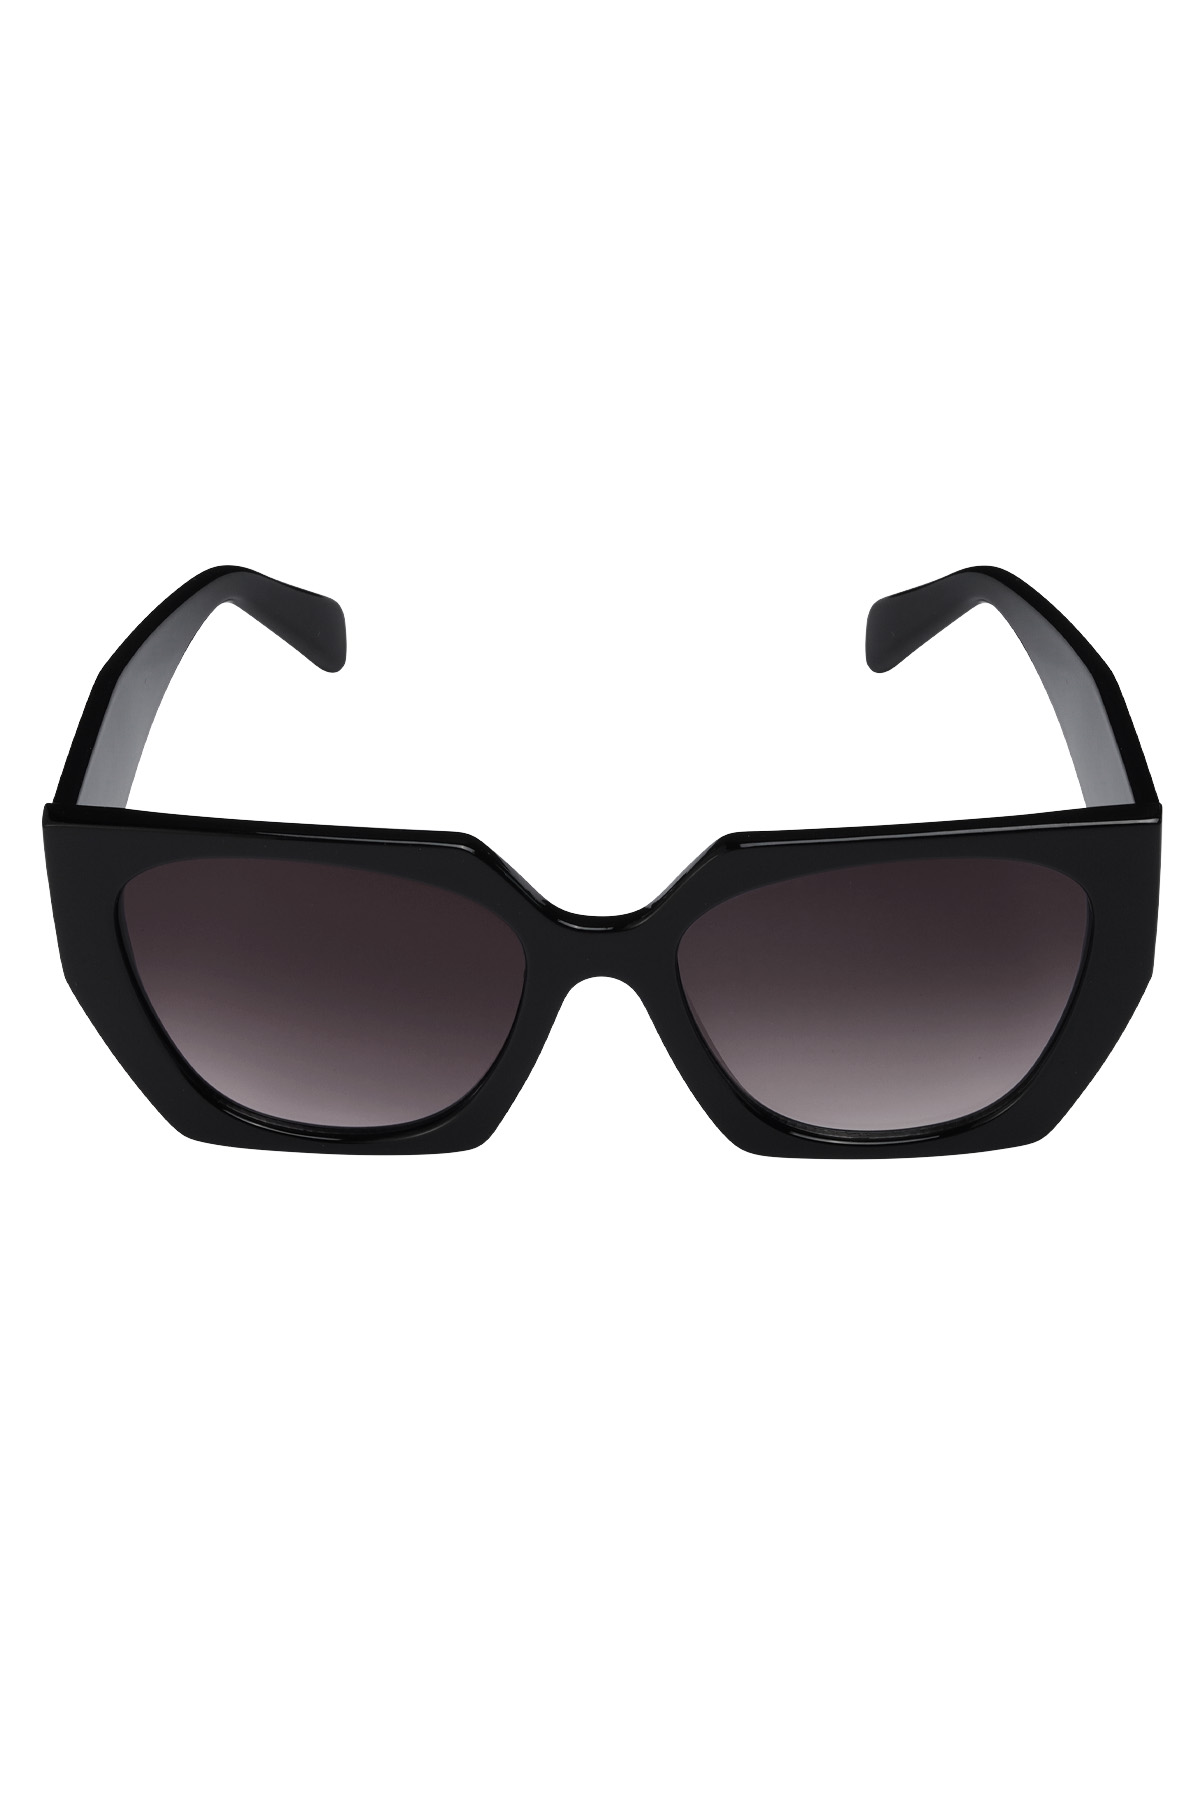 Trendy angular sunglasses - black 